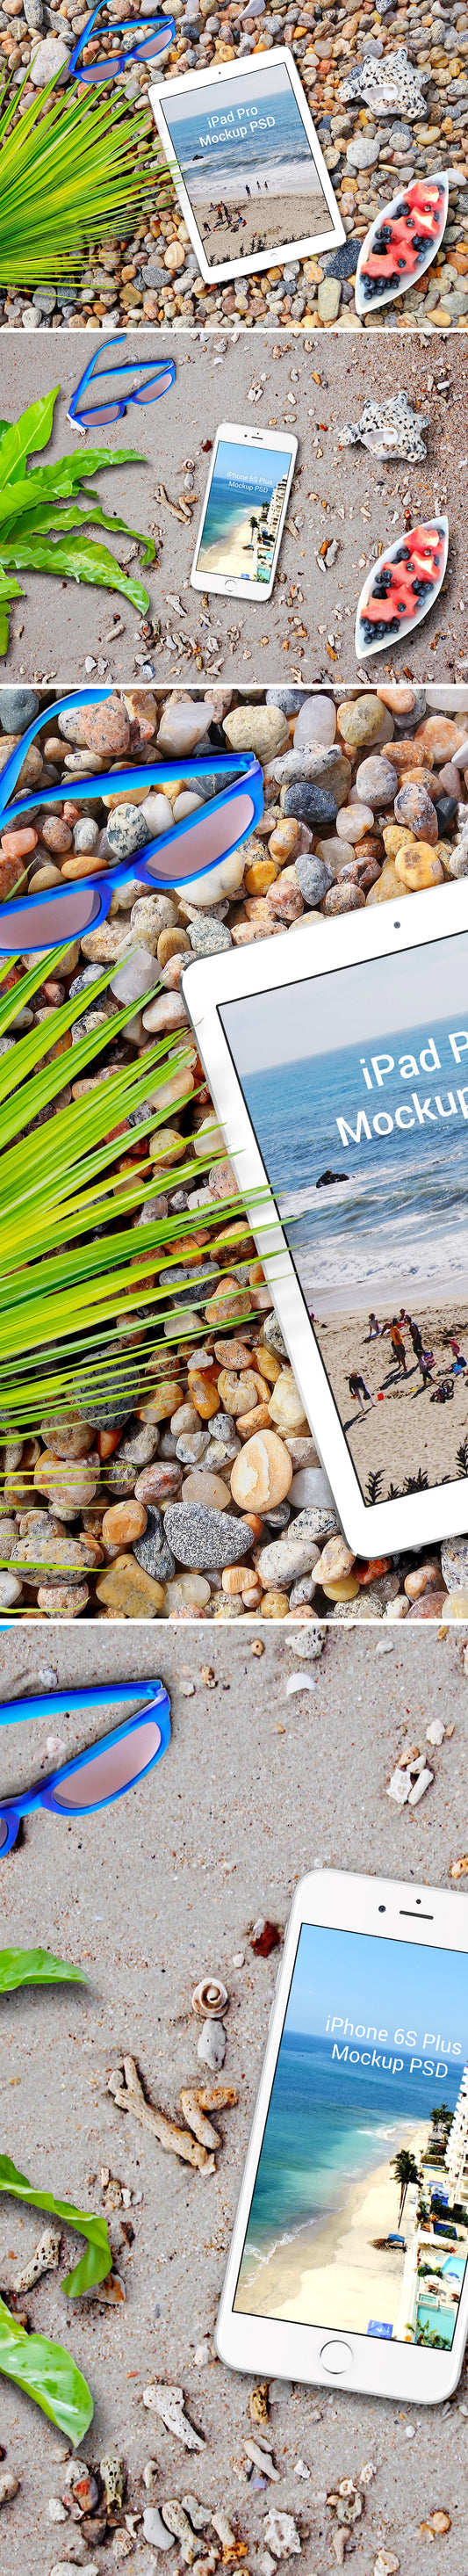 Free iPhone 6s Plus And iPad Pro On The Beach Mockup